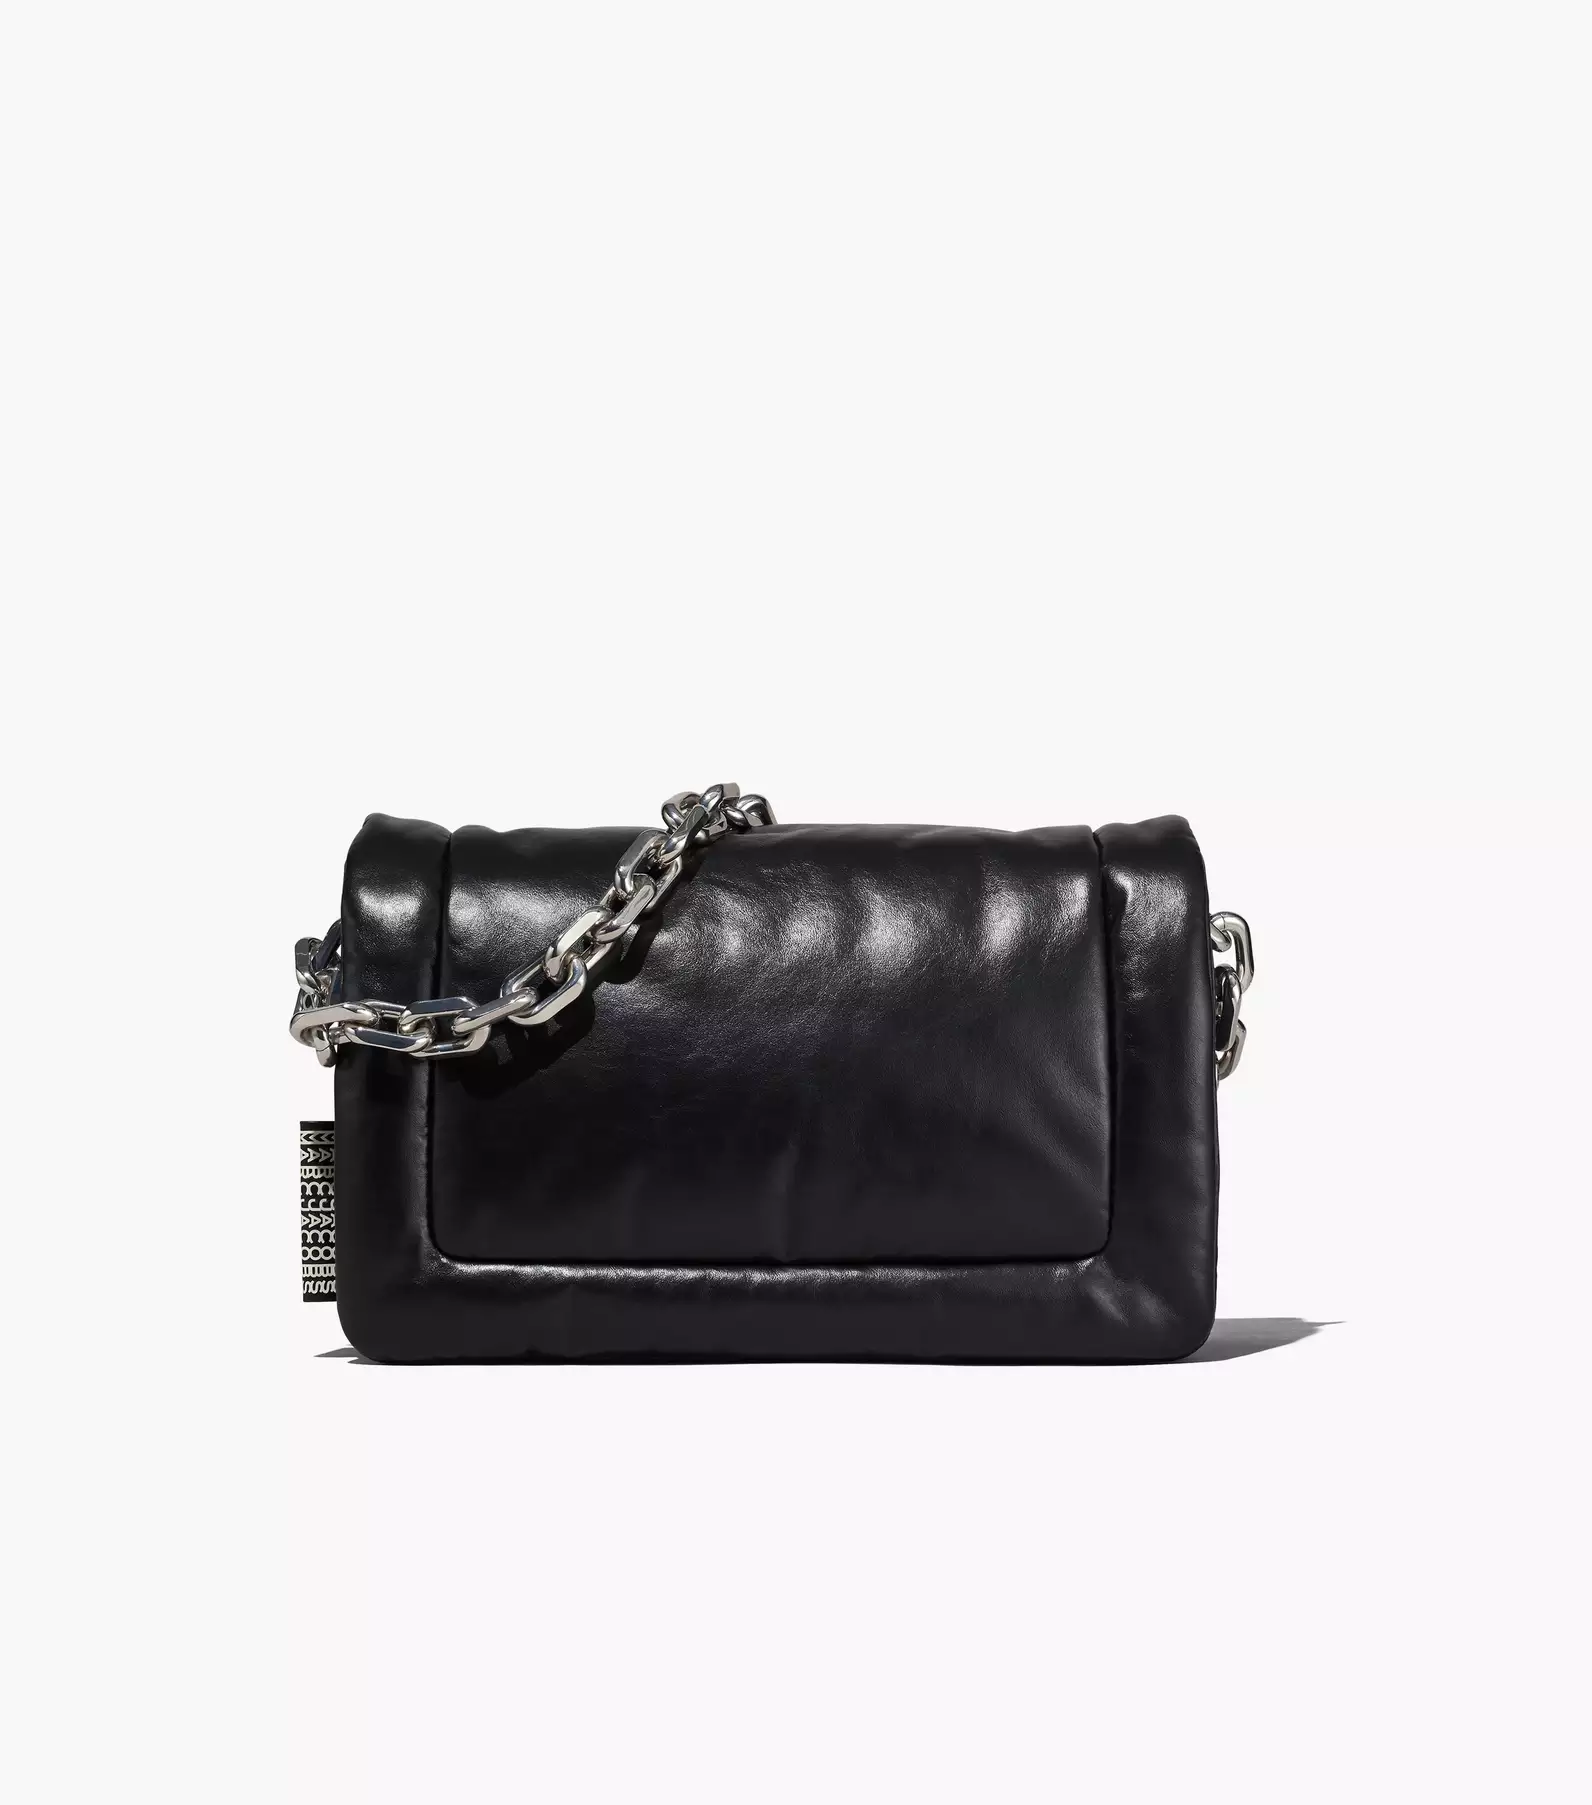 Marc Jacobs pillow bag black with dust bag